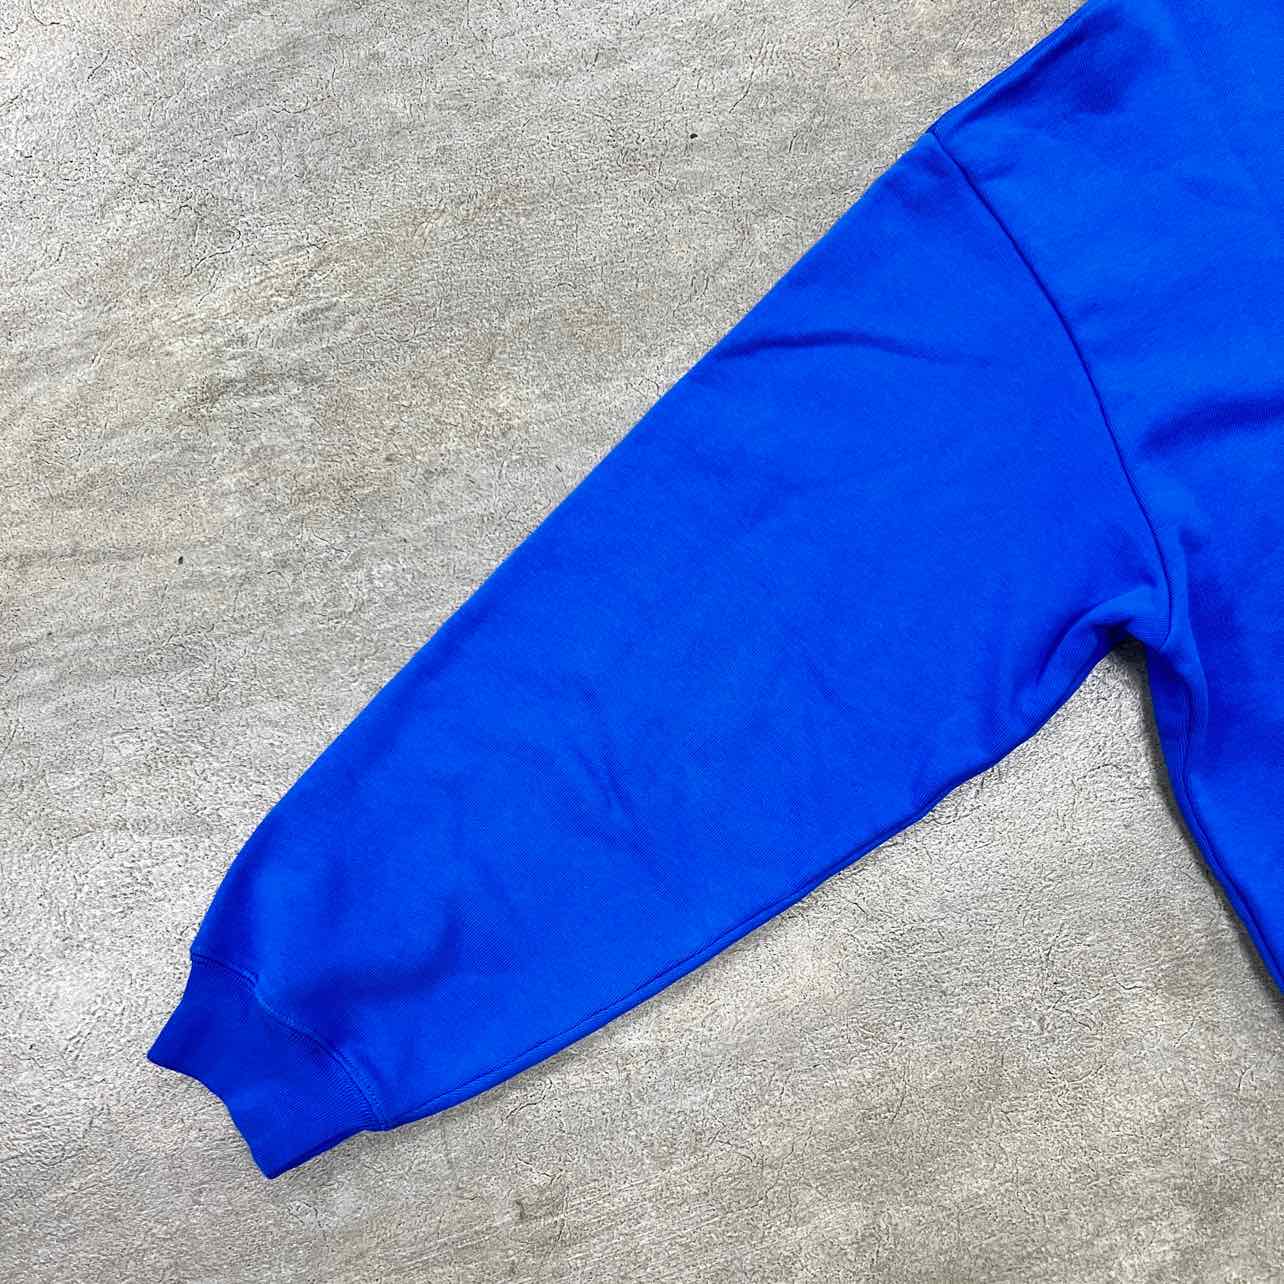 Balenciaga Crewneck Sweater &quot;COPYRIGHT LOGO&quot; Blue Used Size M